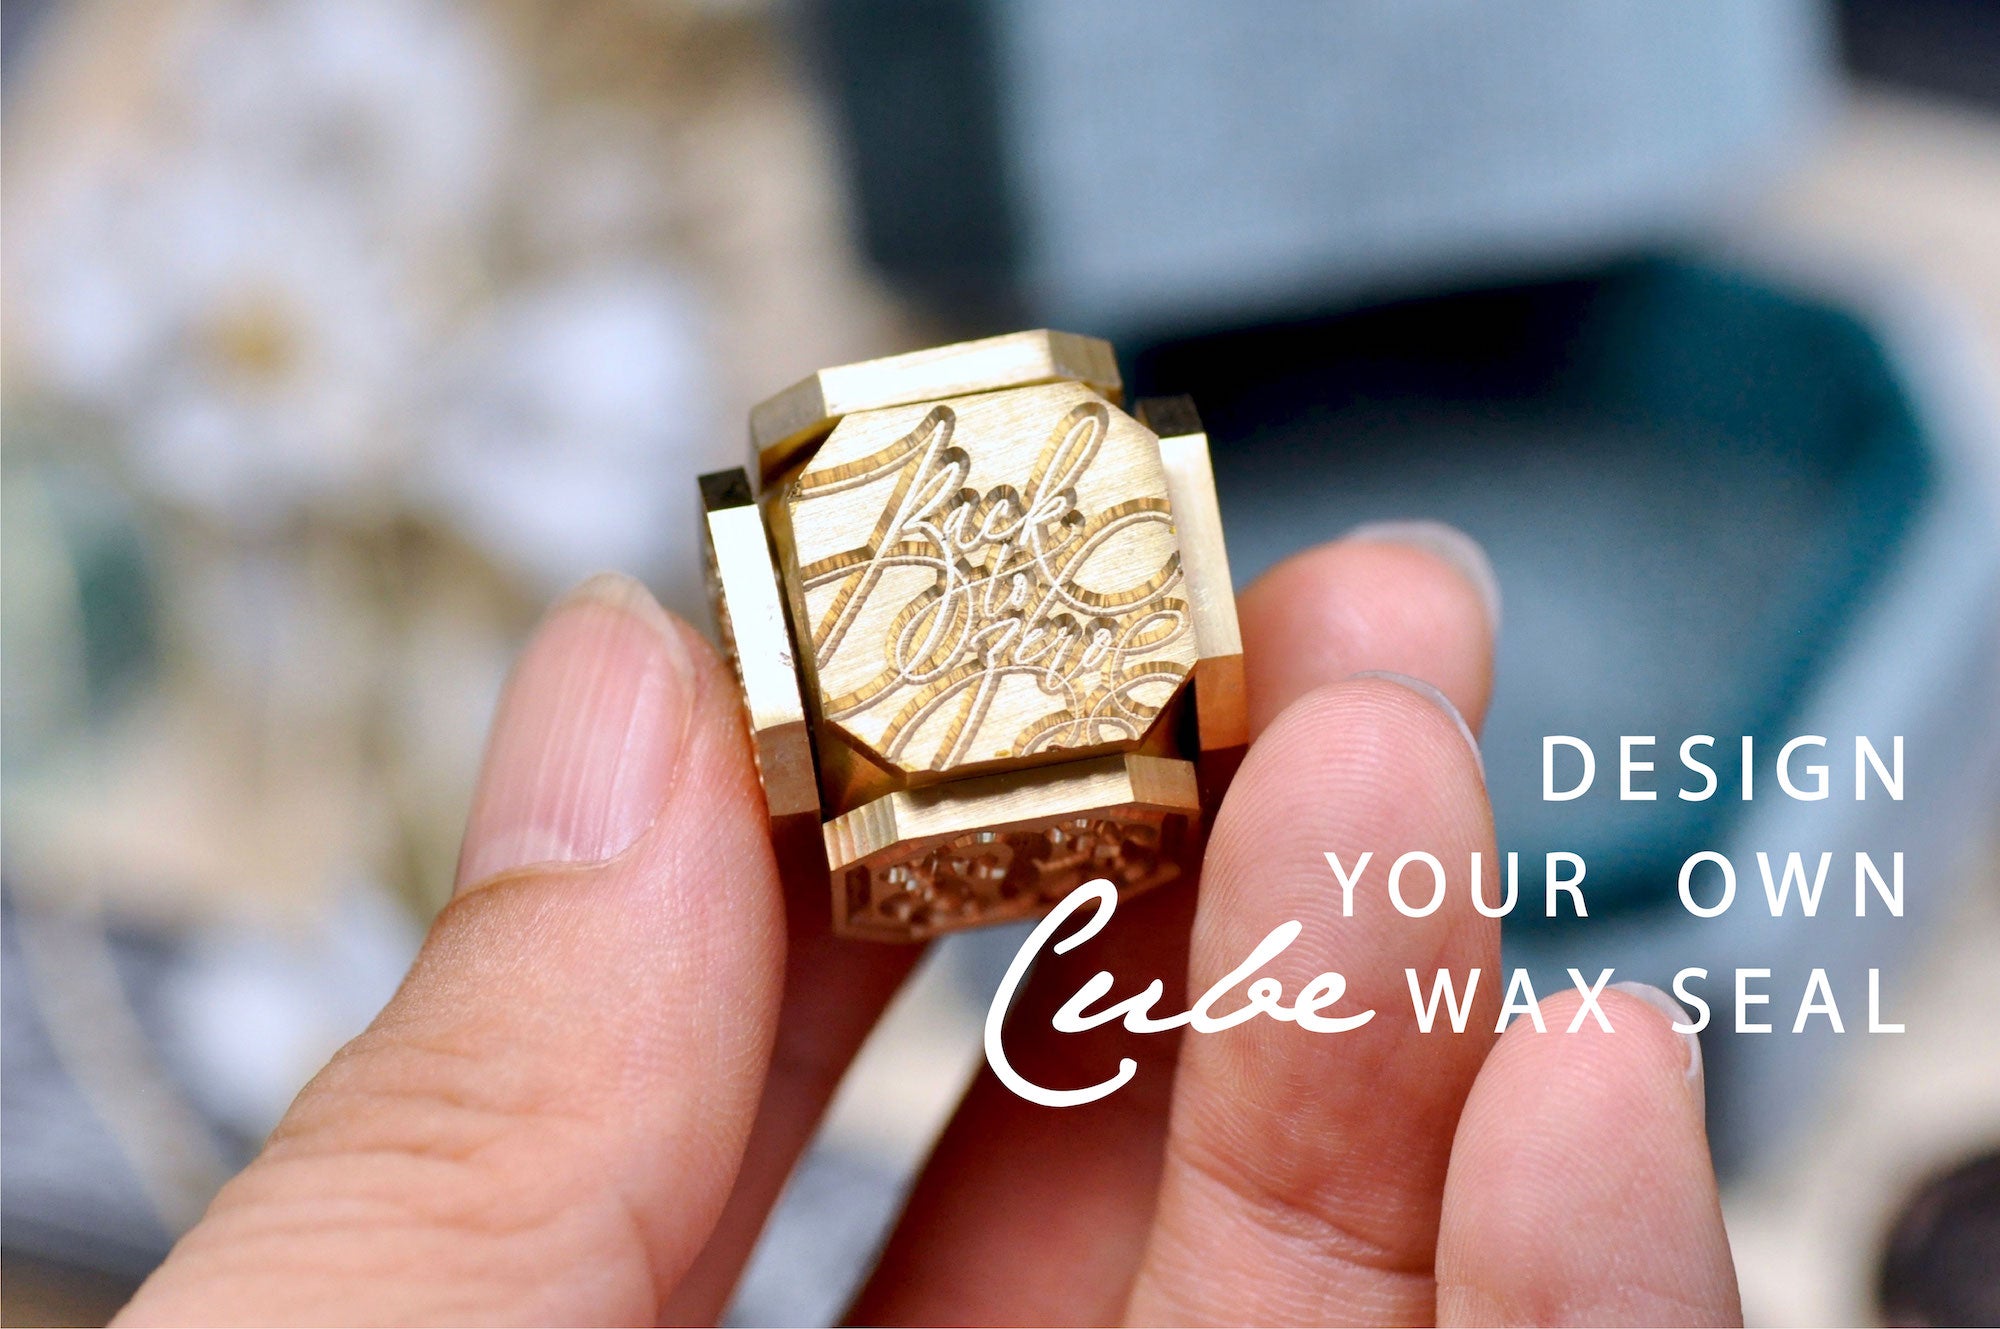 OOAK Design Your Own Cube Wax Seal | Granite